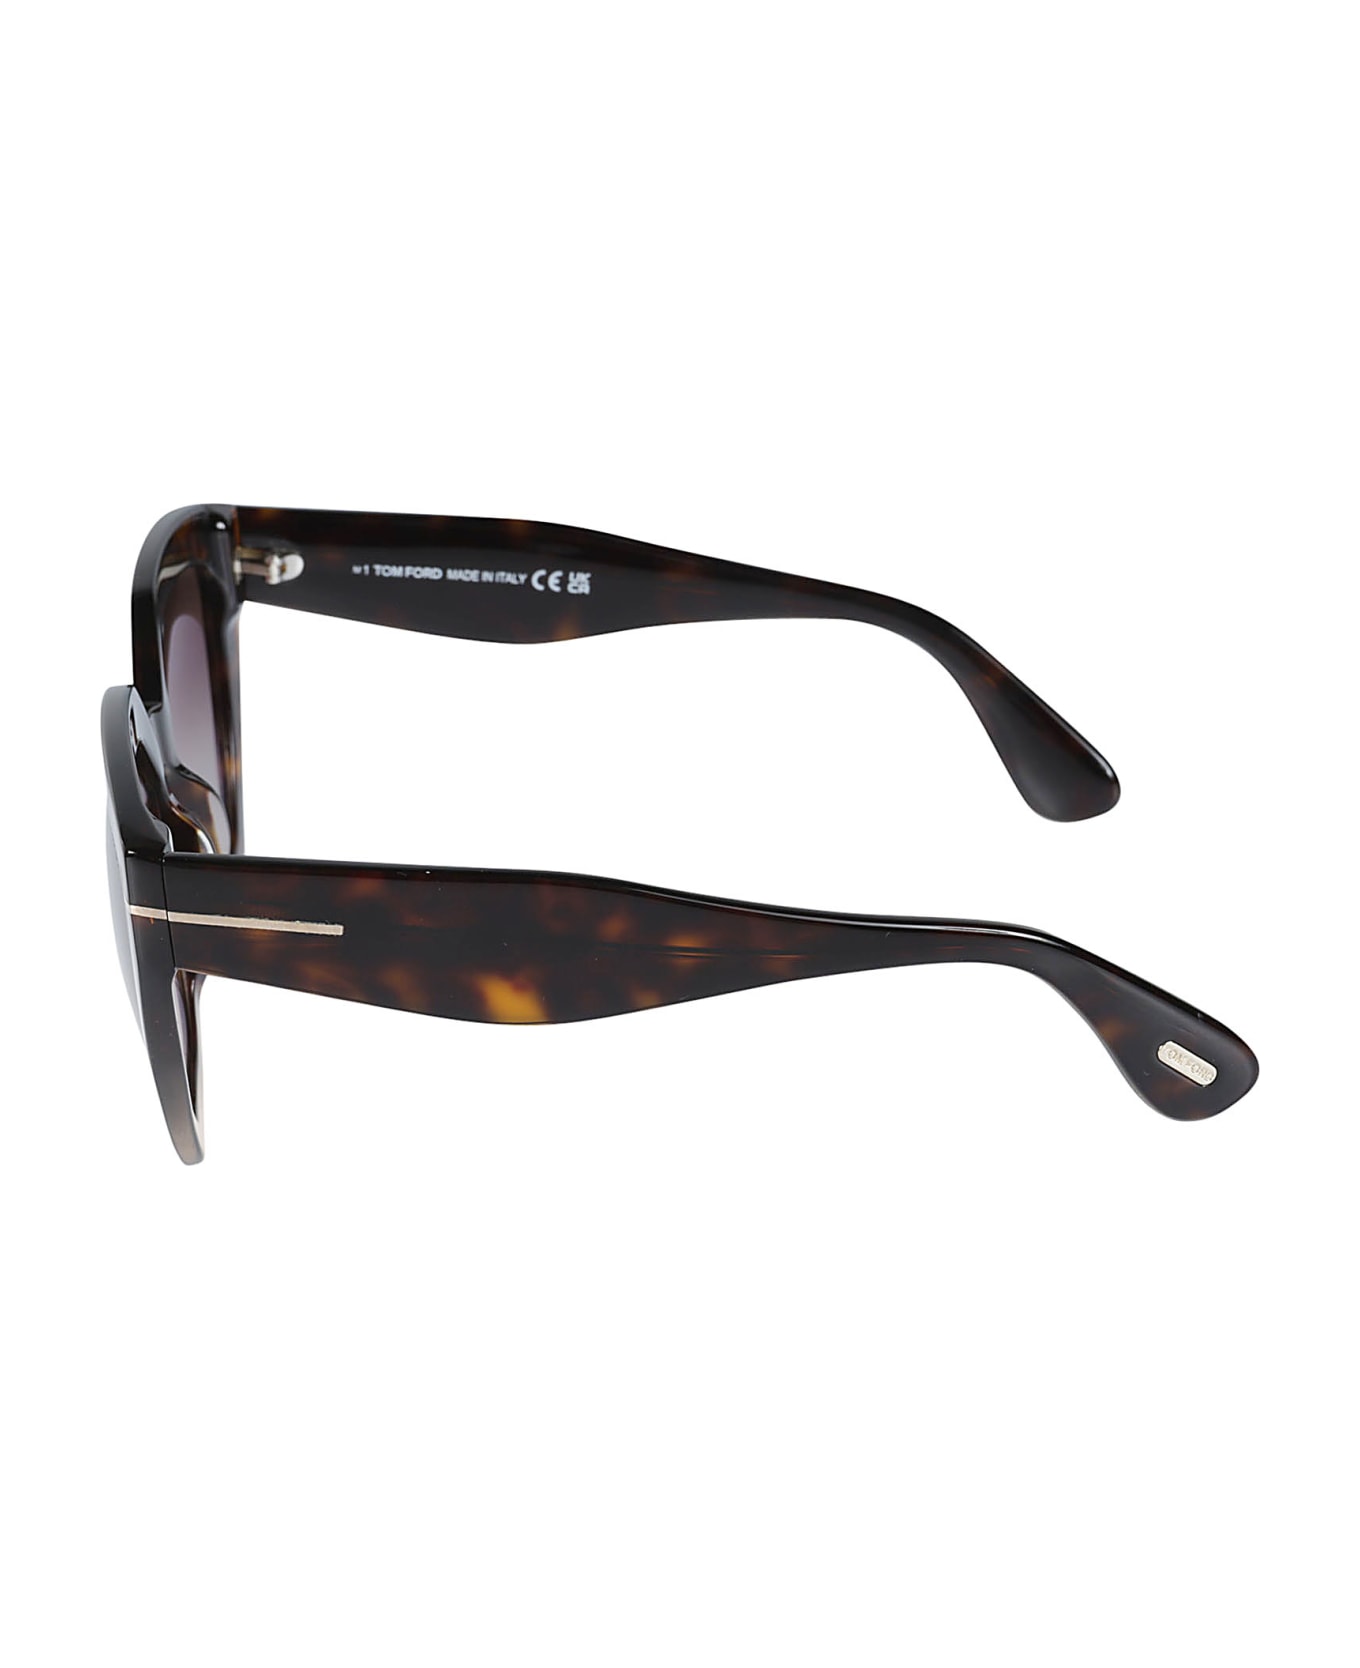 Tom Ford Eyewear Phoebe Sunglasses - 52K